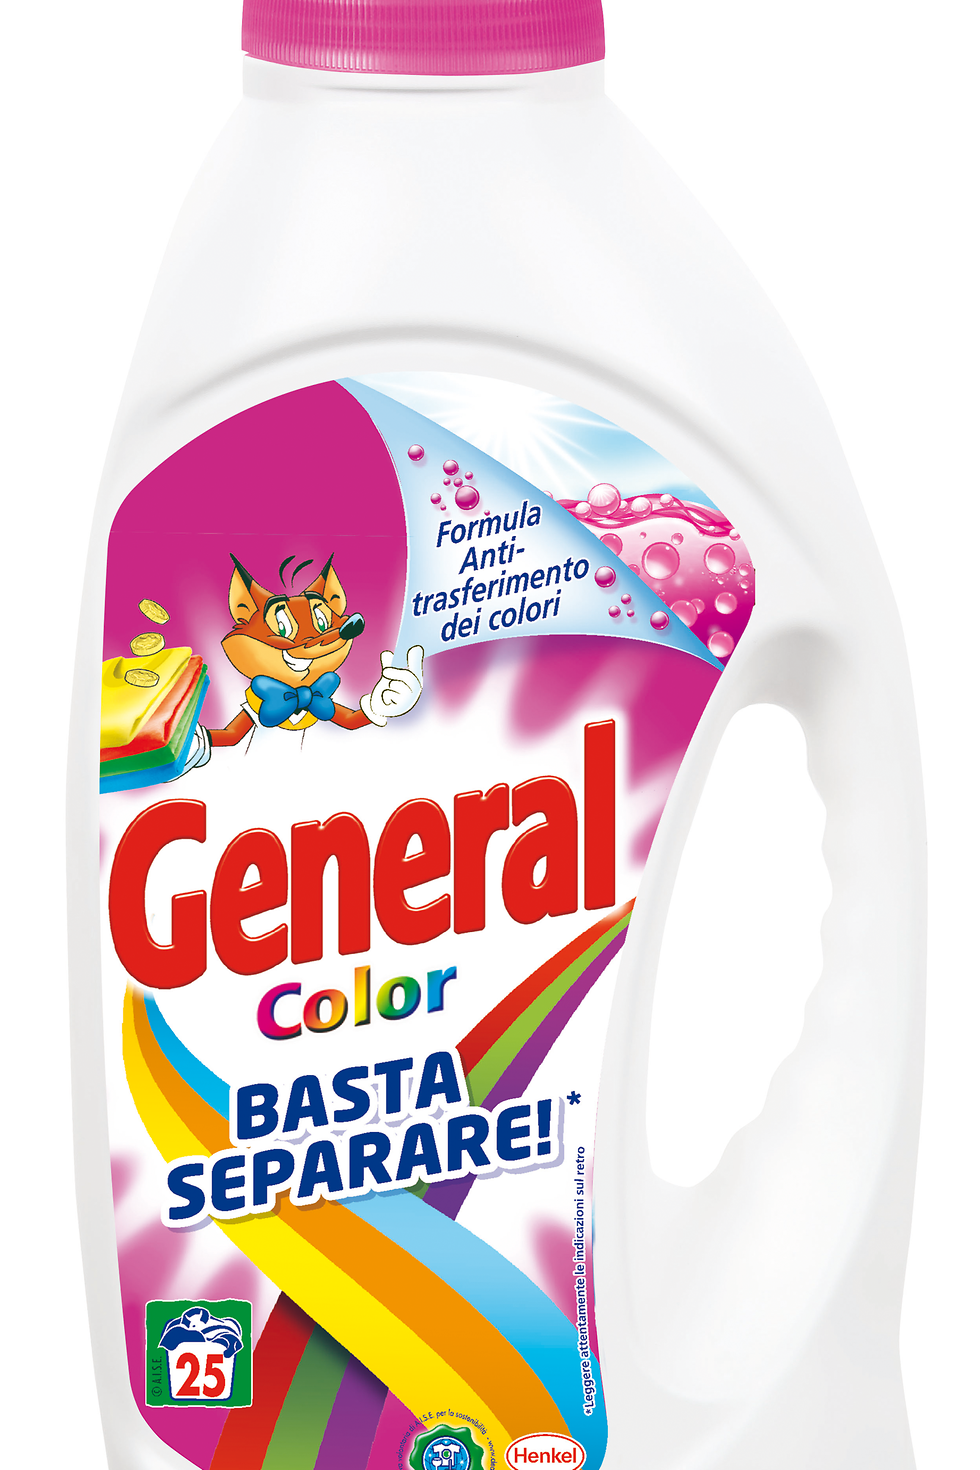 General Color Basta separare